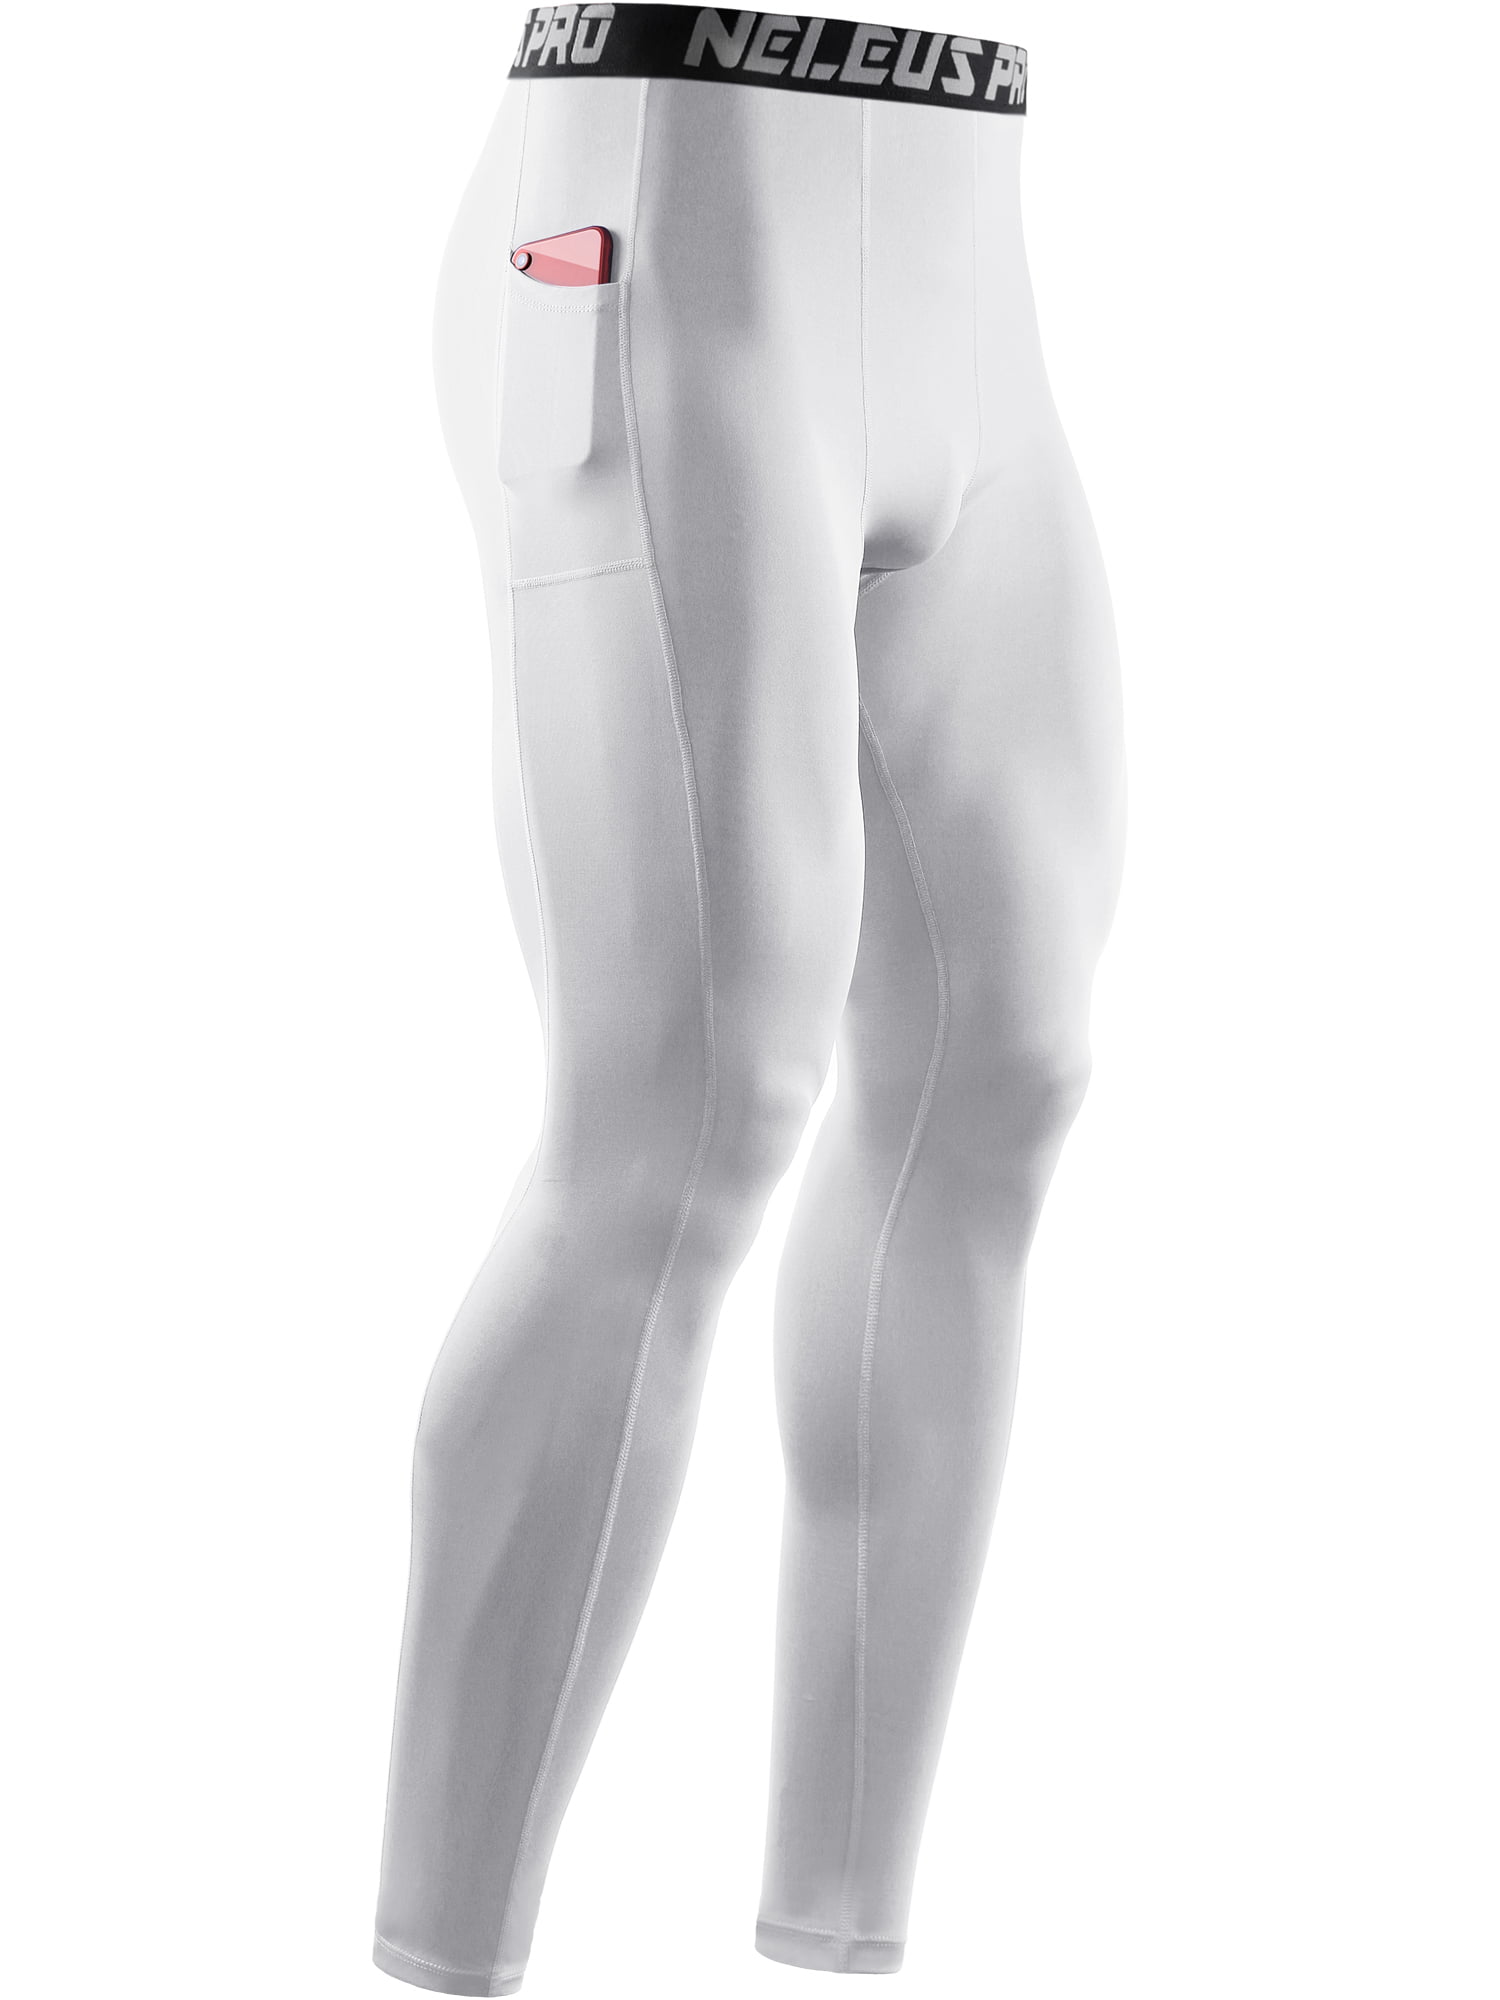 Neleus Men's 2 Pack Compression Pants Running Tights Sport Leggings,6026,White,Black,L,EUR  XL